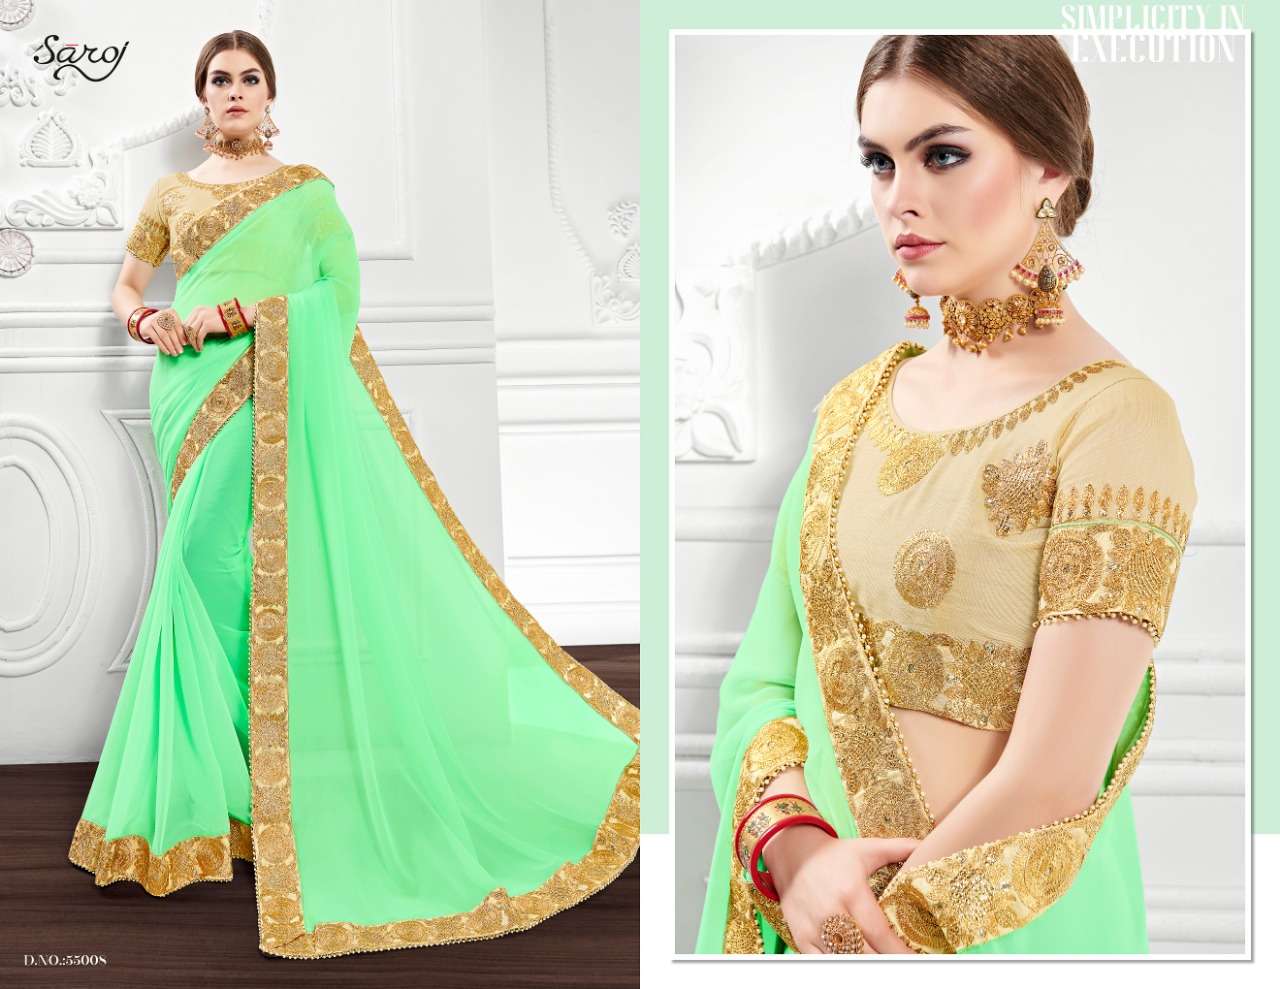 Saroj Saree Indian Fashion 55008